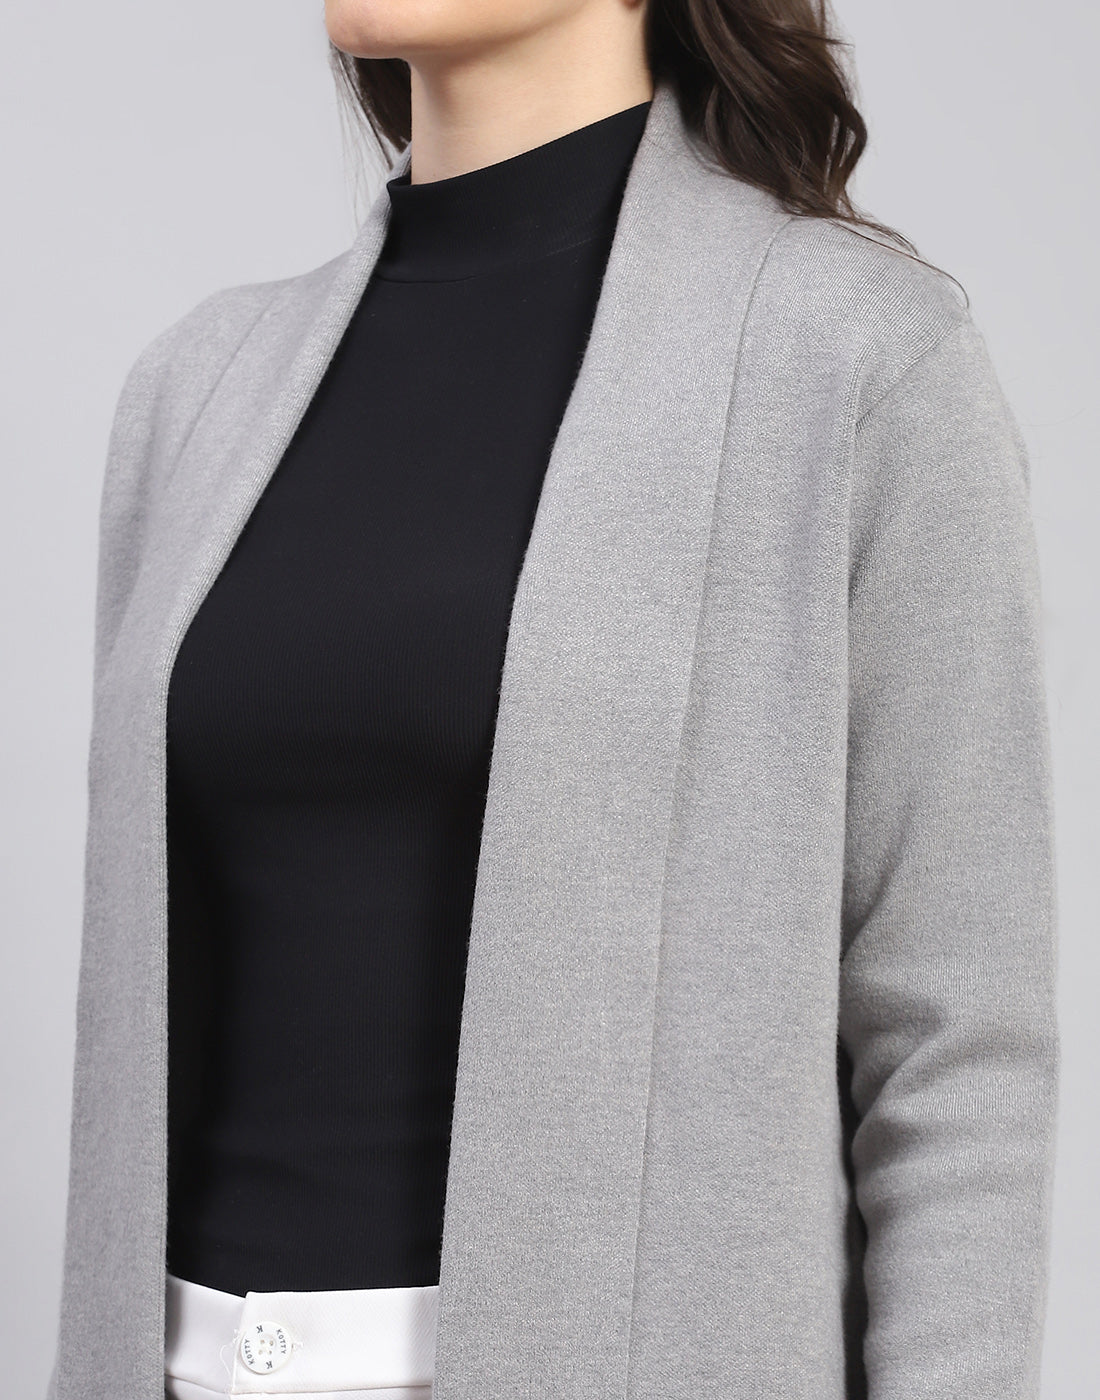 Women Grey Self Design Front Open Full Sleeve Cardigan